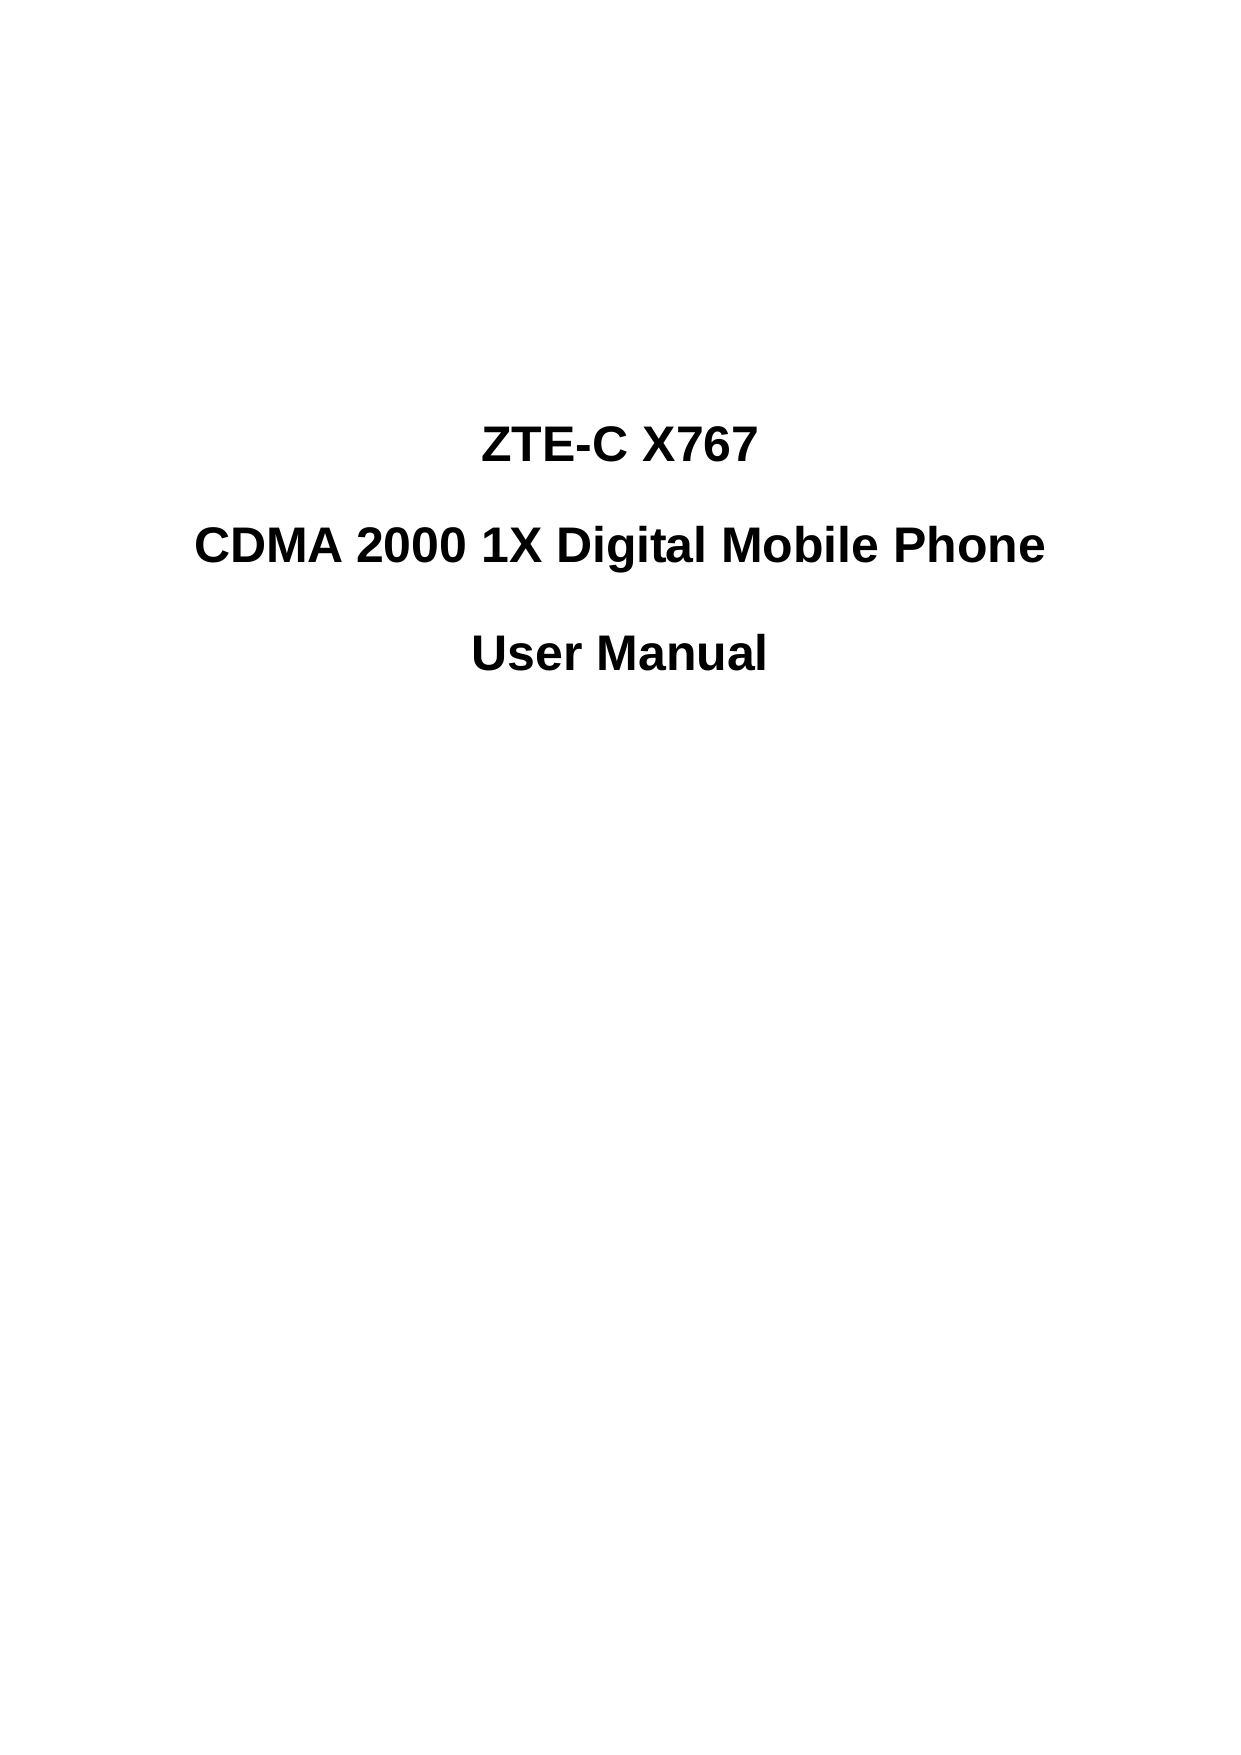      ZTE-C X767 CDMA 2000 1X Digital Mobile Phone User Manual                